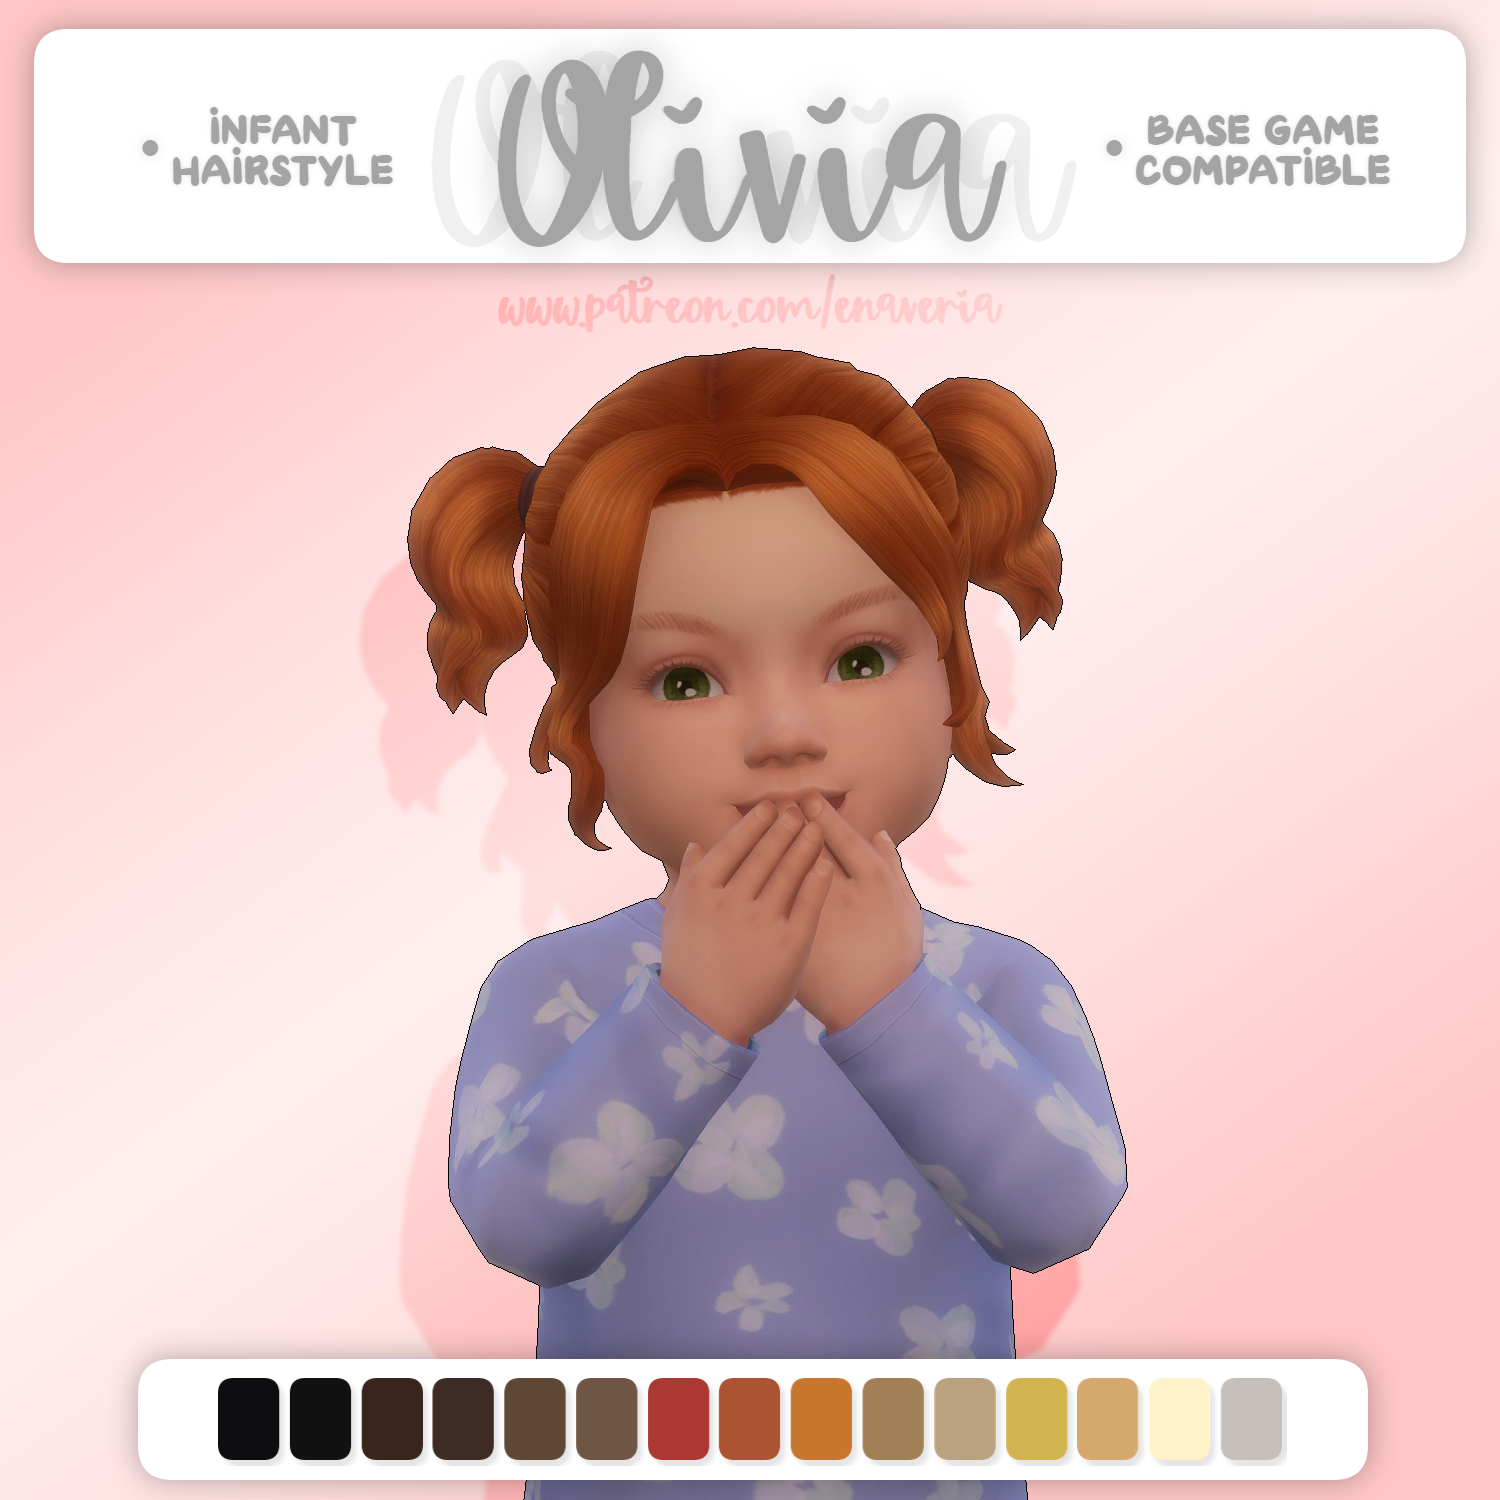 Olivia | Infant Hair - The Sims 4 Create a Sim - CurseForge